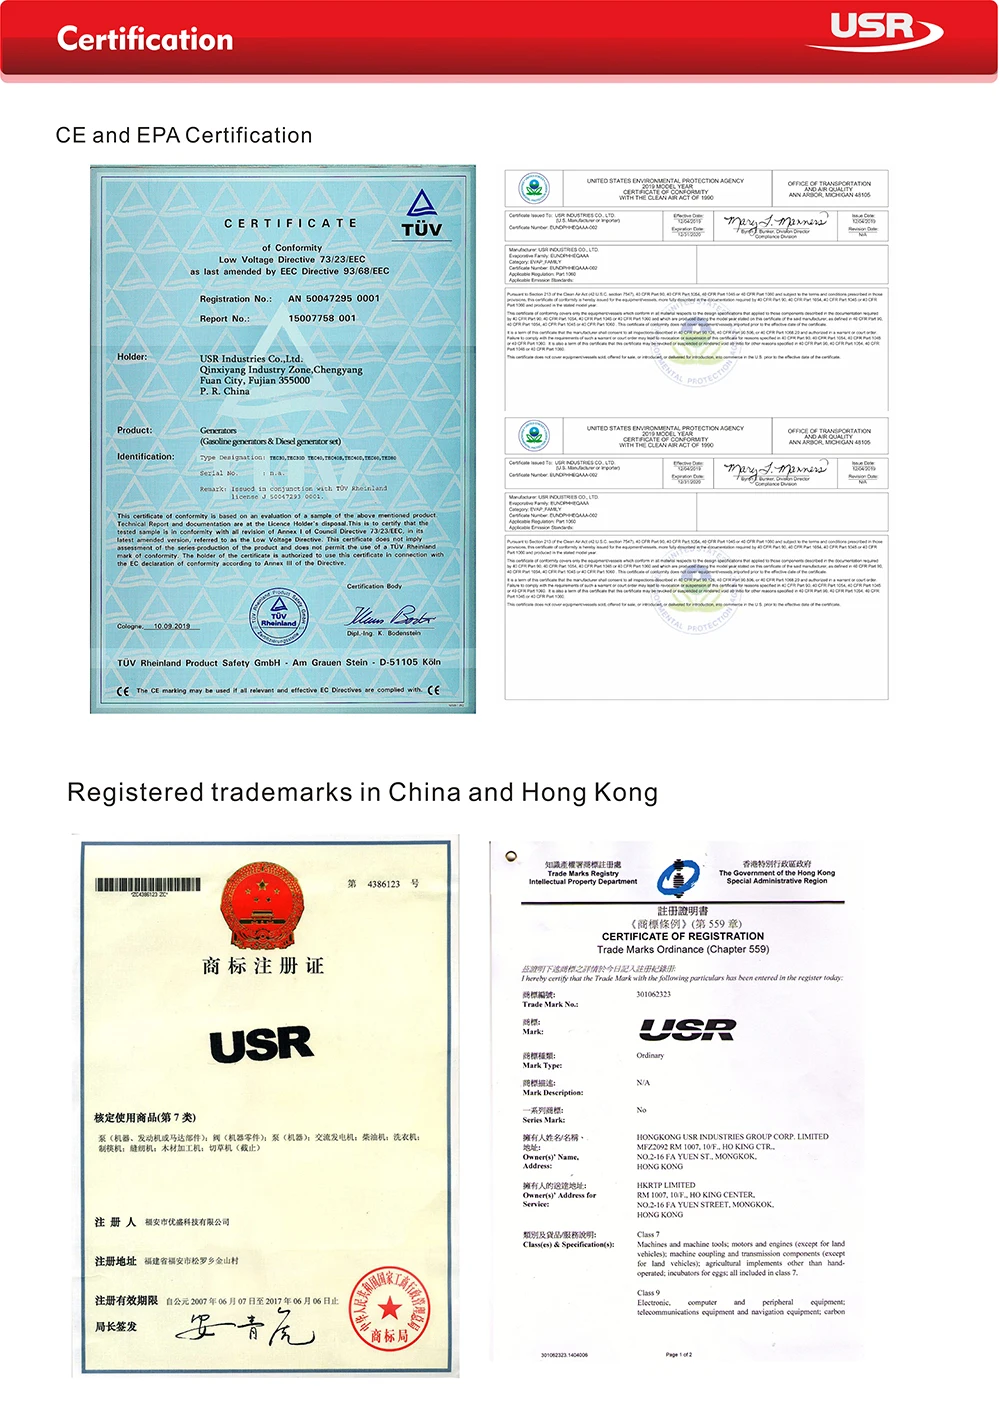 Certification_1.jpg